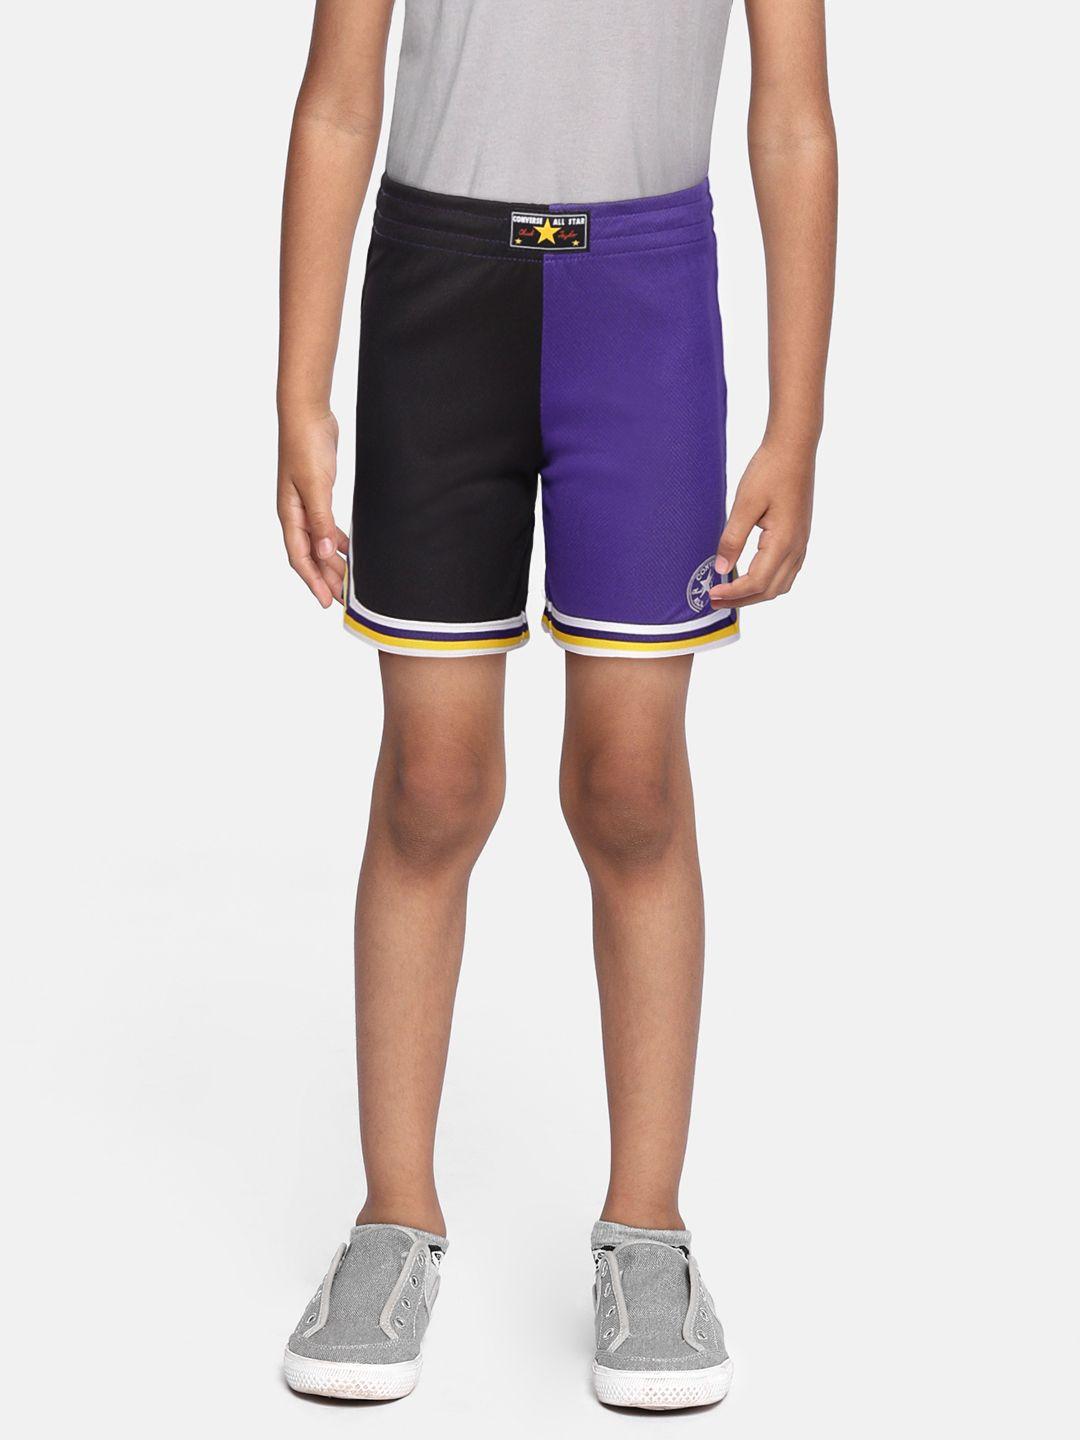 converse-boys-black-&-purple-colourblocked-shorts